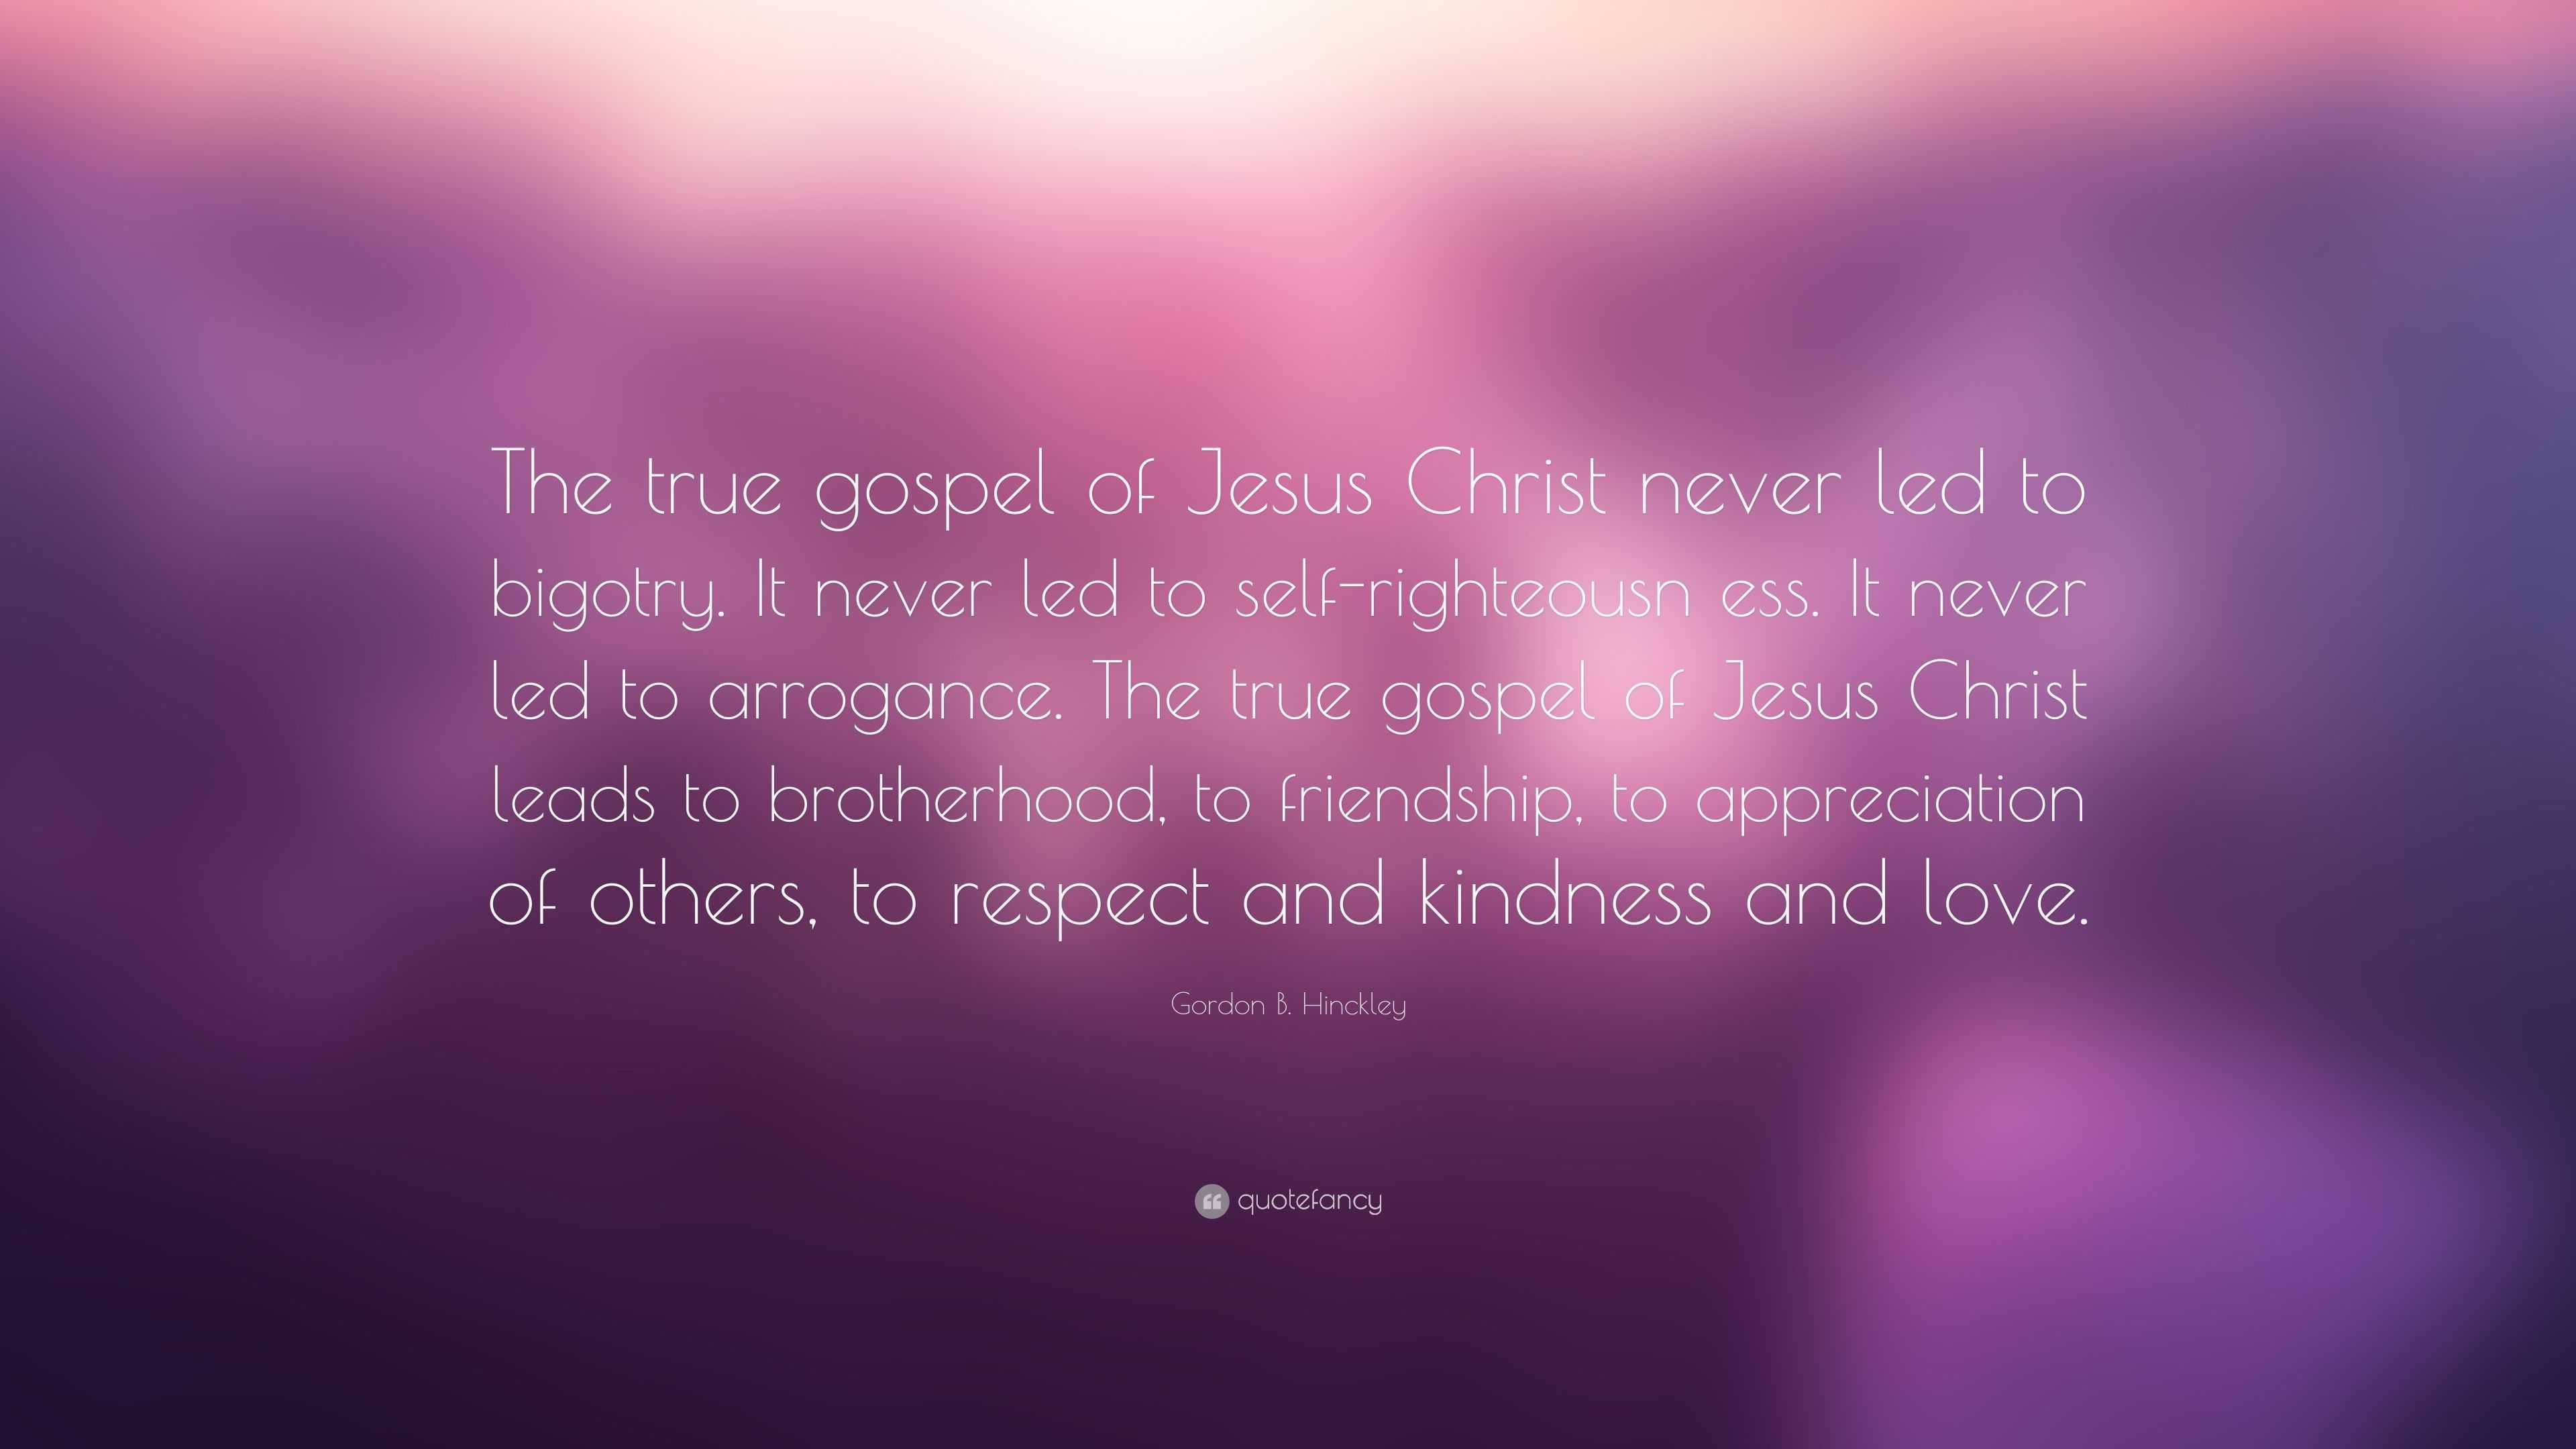 Gordon B. Hinckley Quote: “The true gospel of Jesus Christ never led to ...